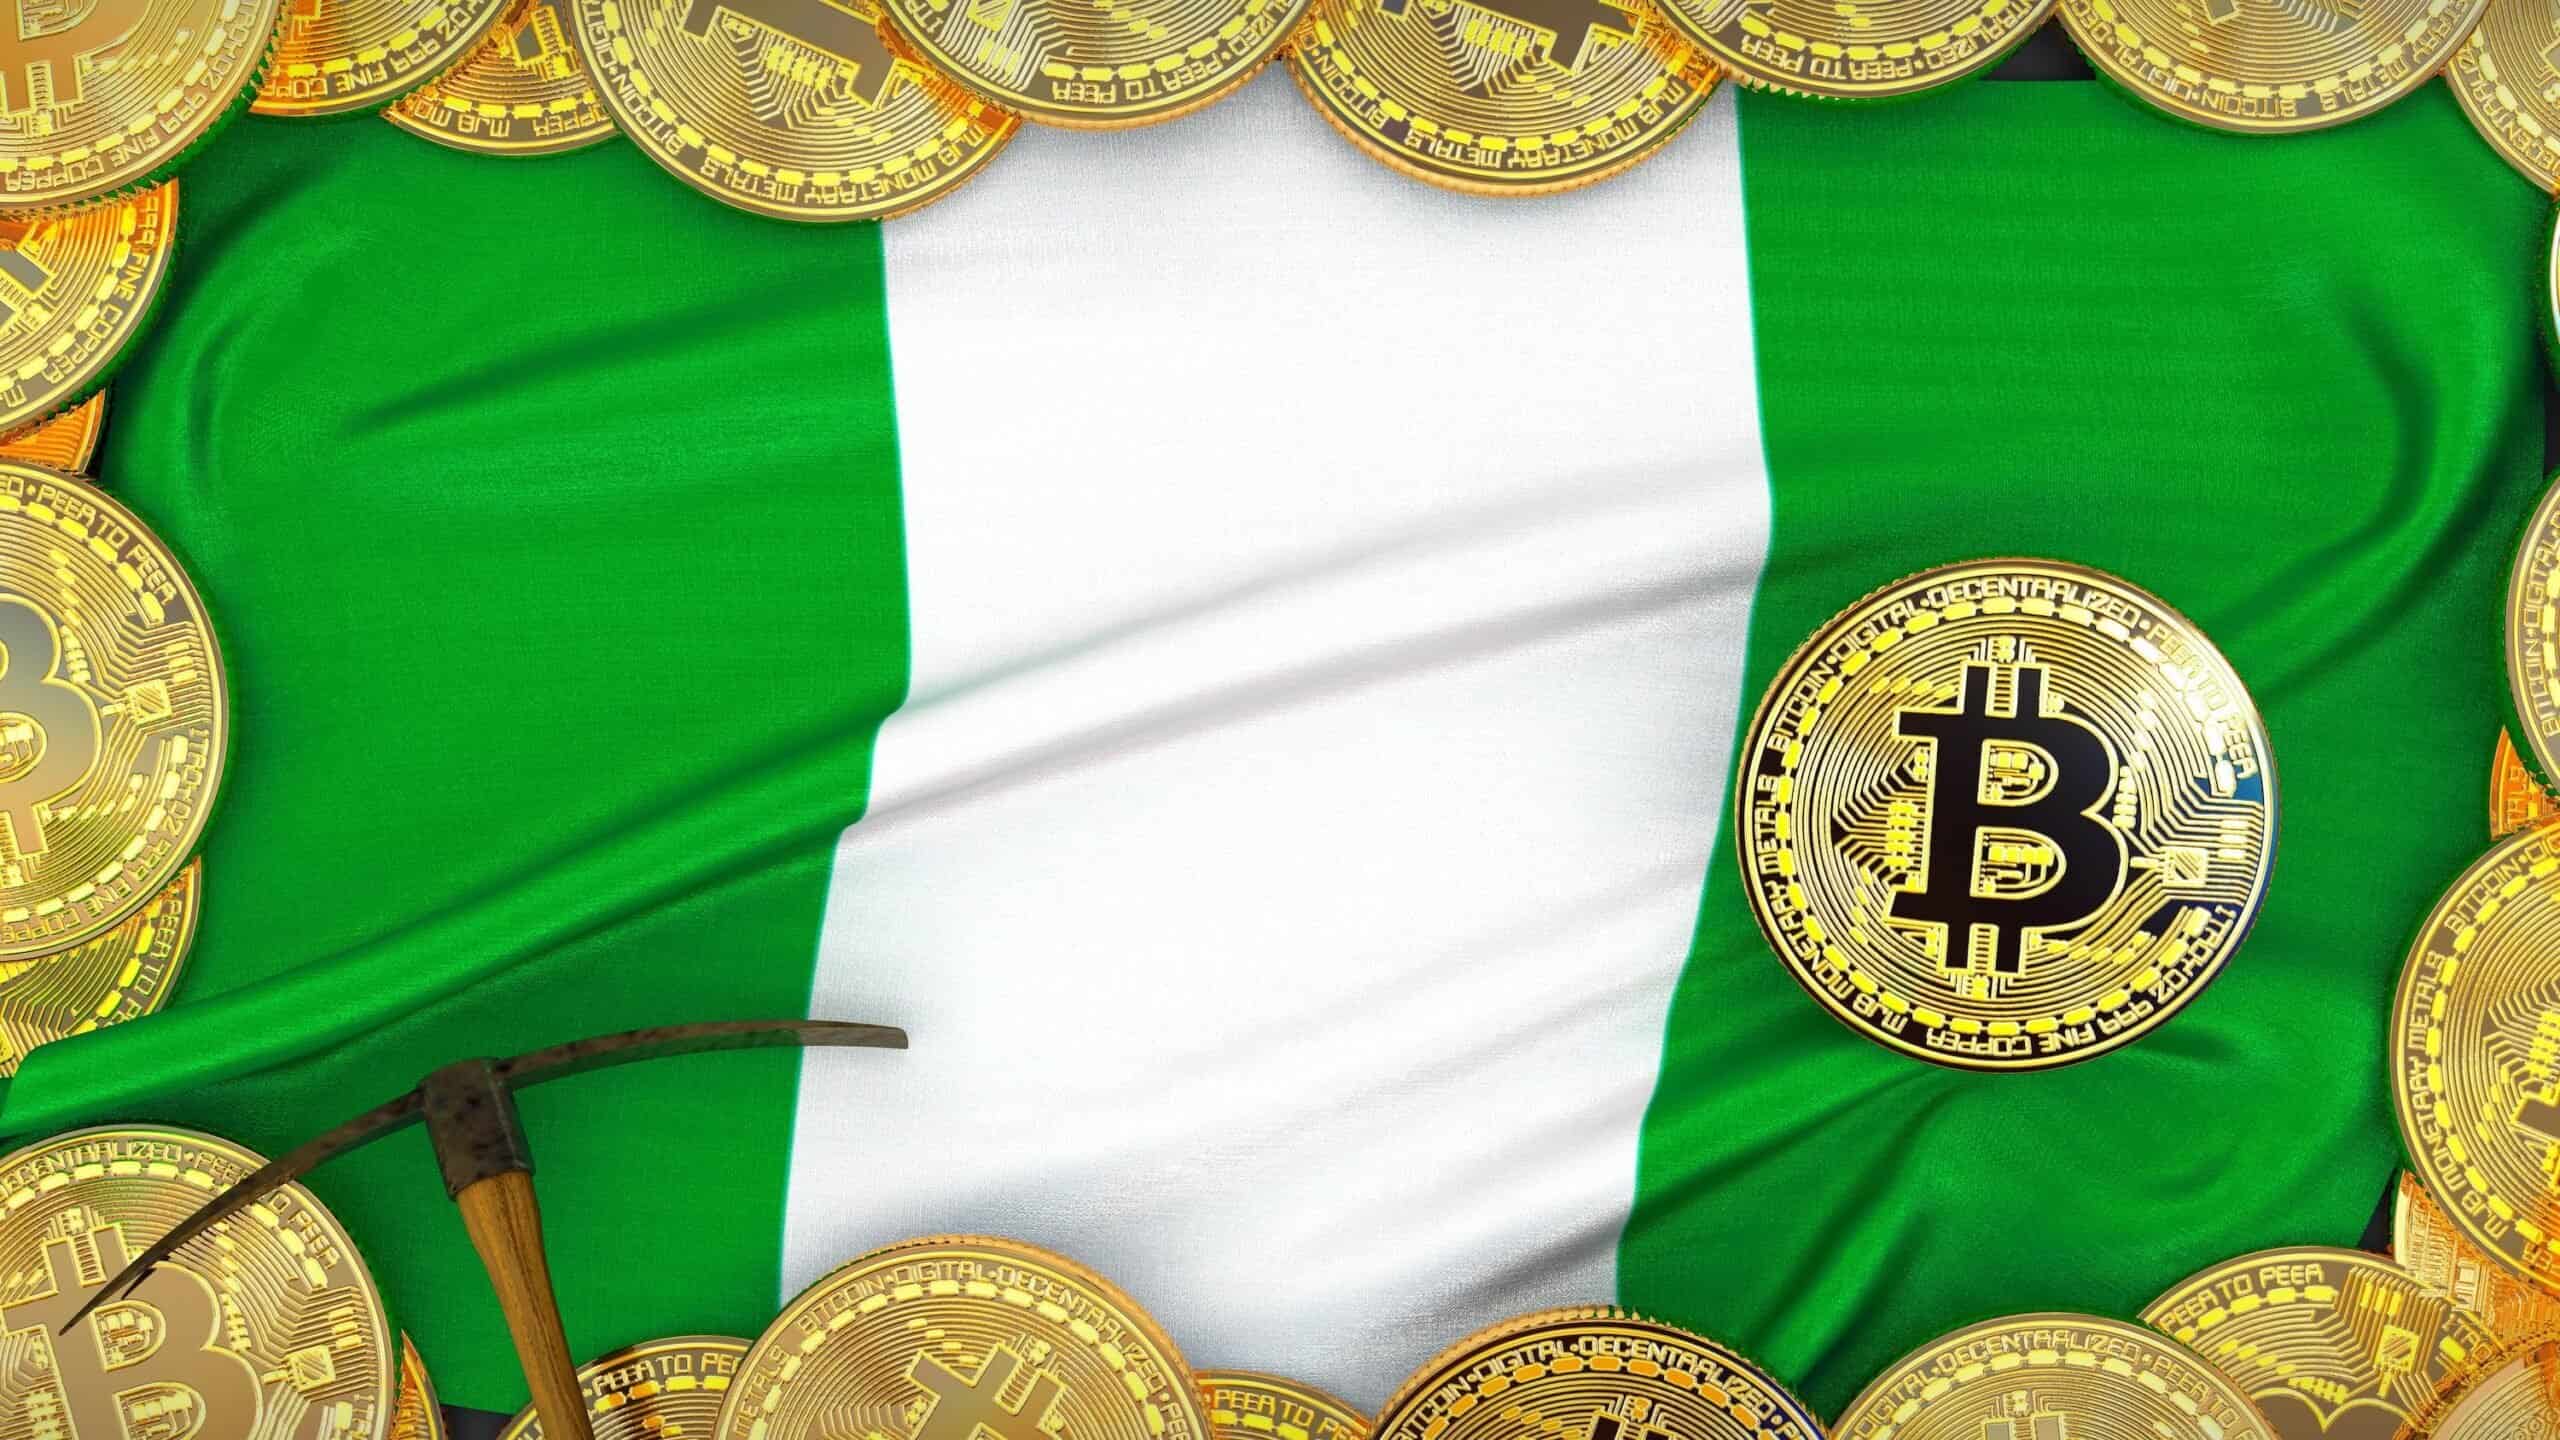 Data reveals a 16% increase in Nigeria’s P2P bitcoin trades following its crypto ban